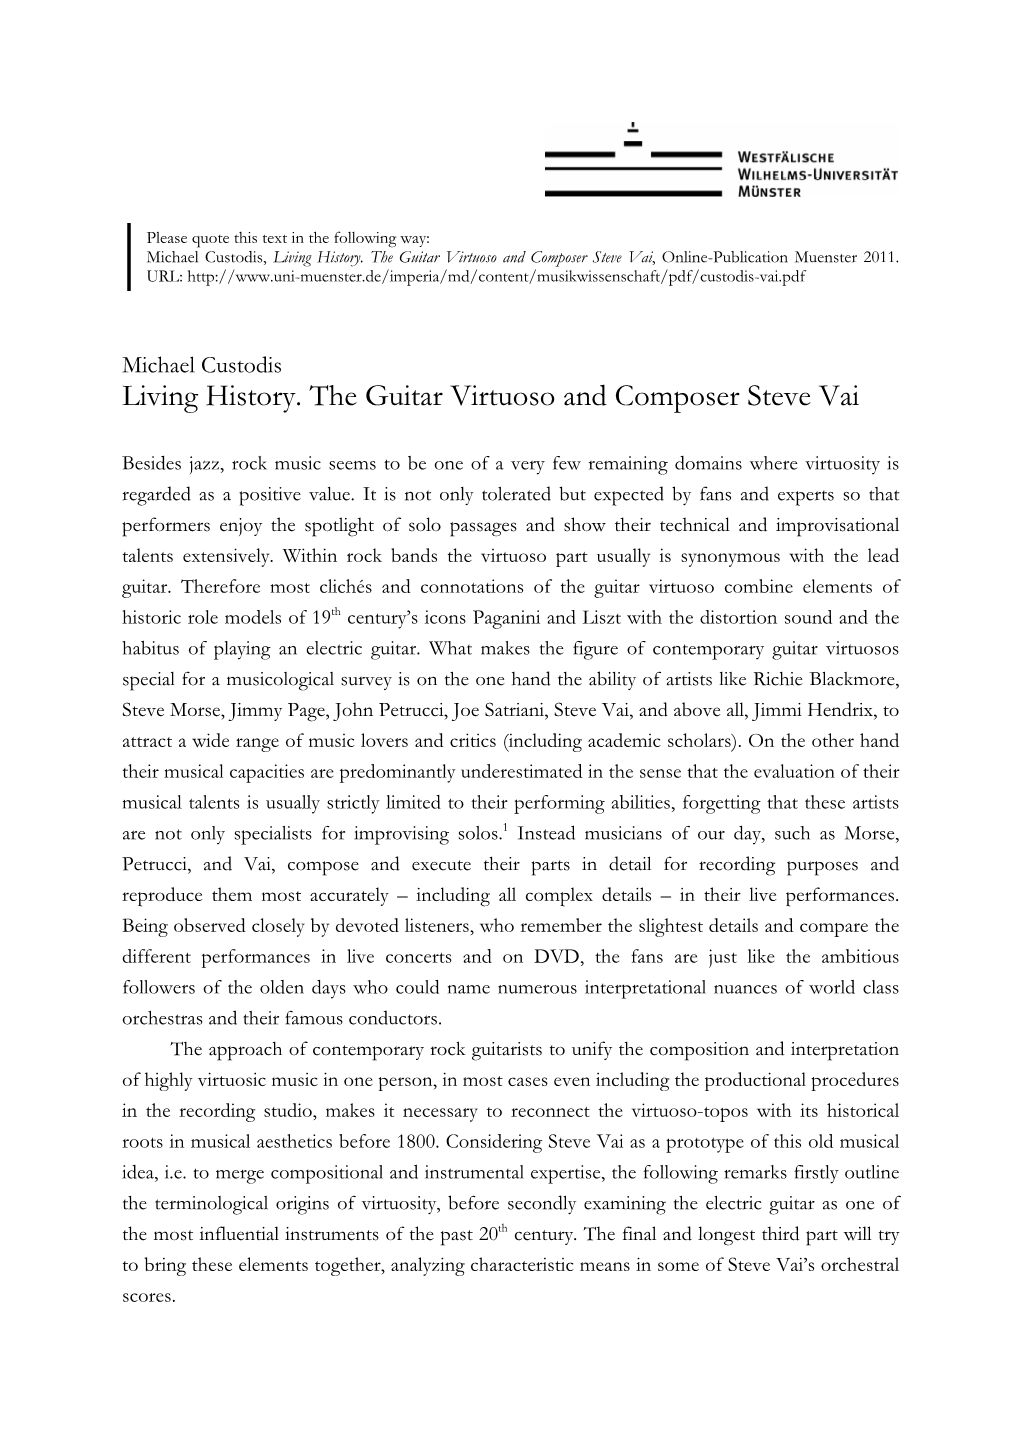 Living History. the Guitar Virtuoso and Composer Steve Vai, Online-Publication Muenster 2011